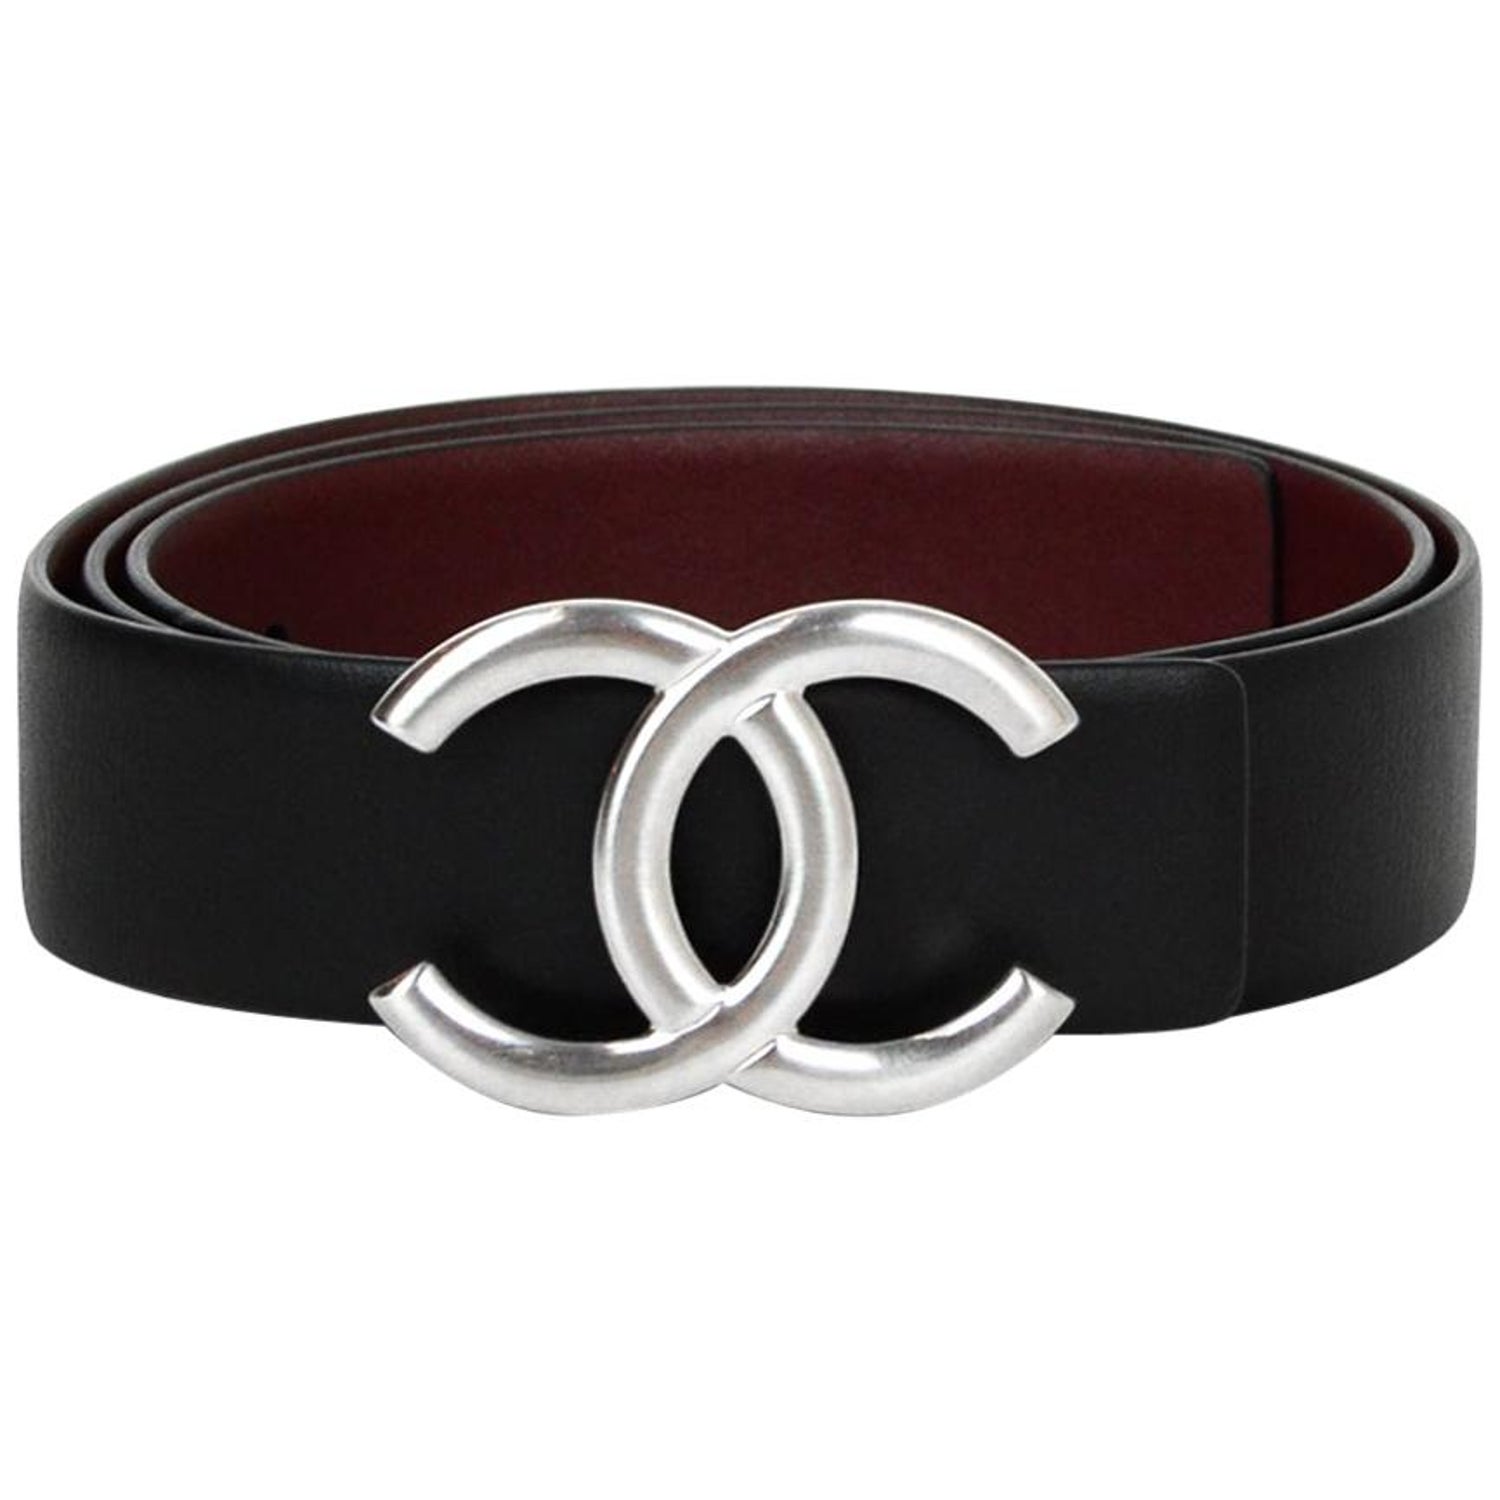 Chanel Reversible Belt - 3 For Sale on 1stDibs